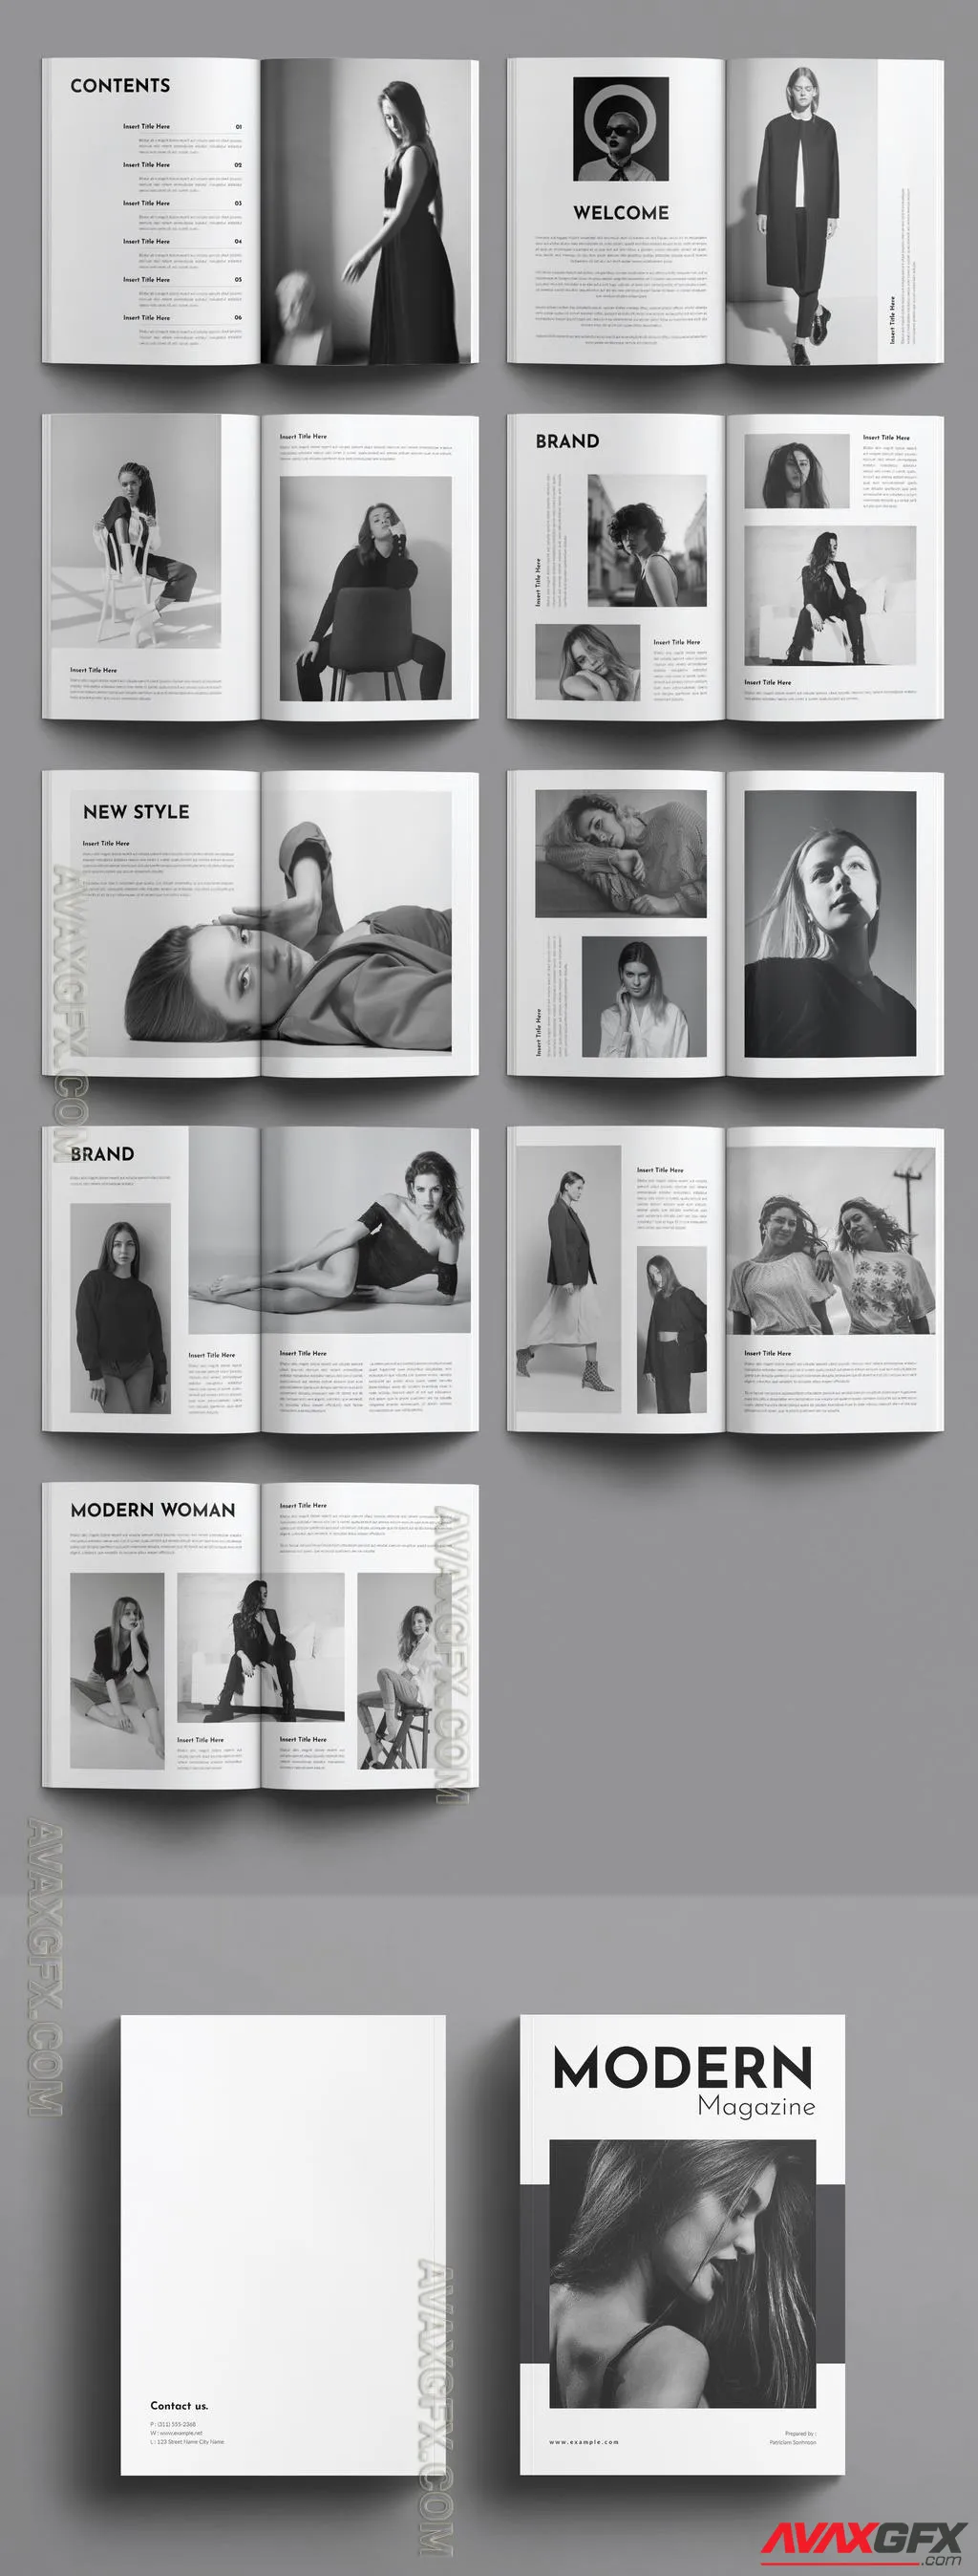 Adobestock - Modern Magazine Template 755490552